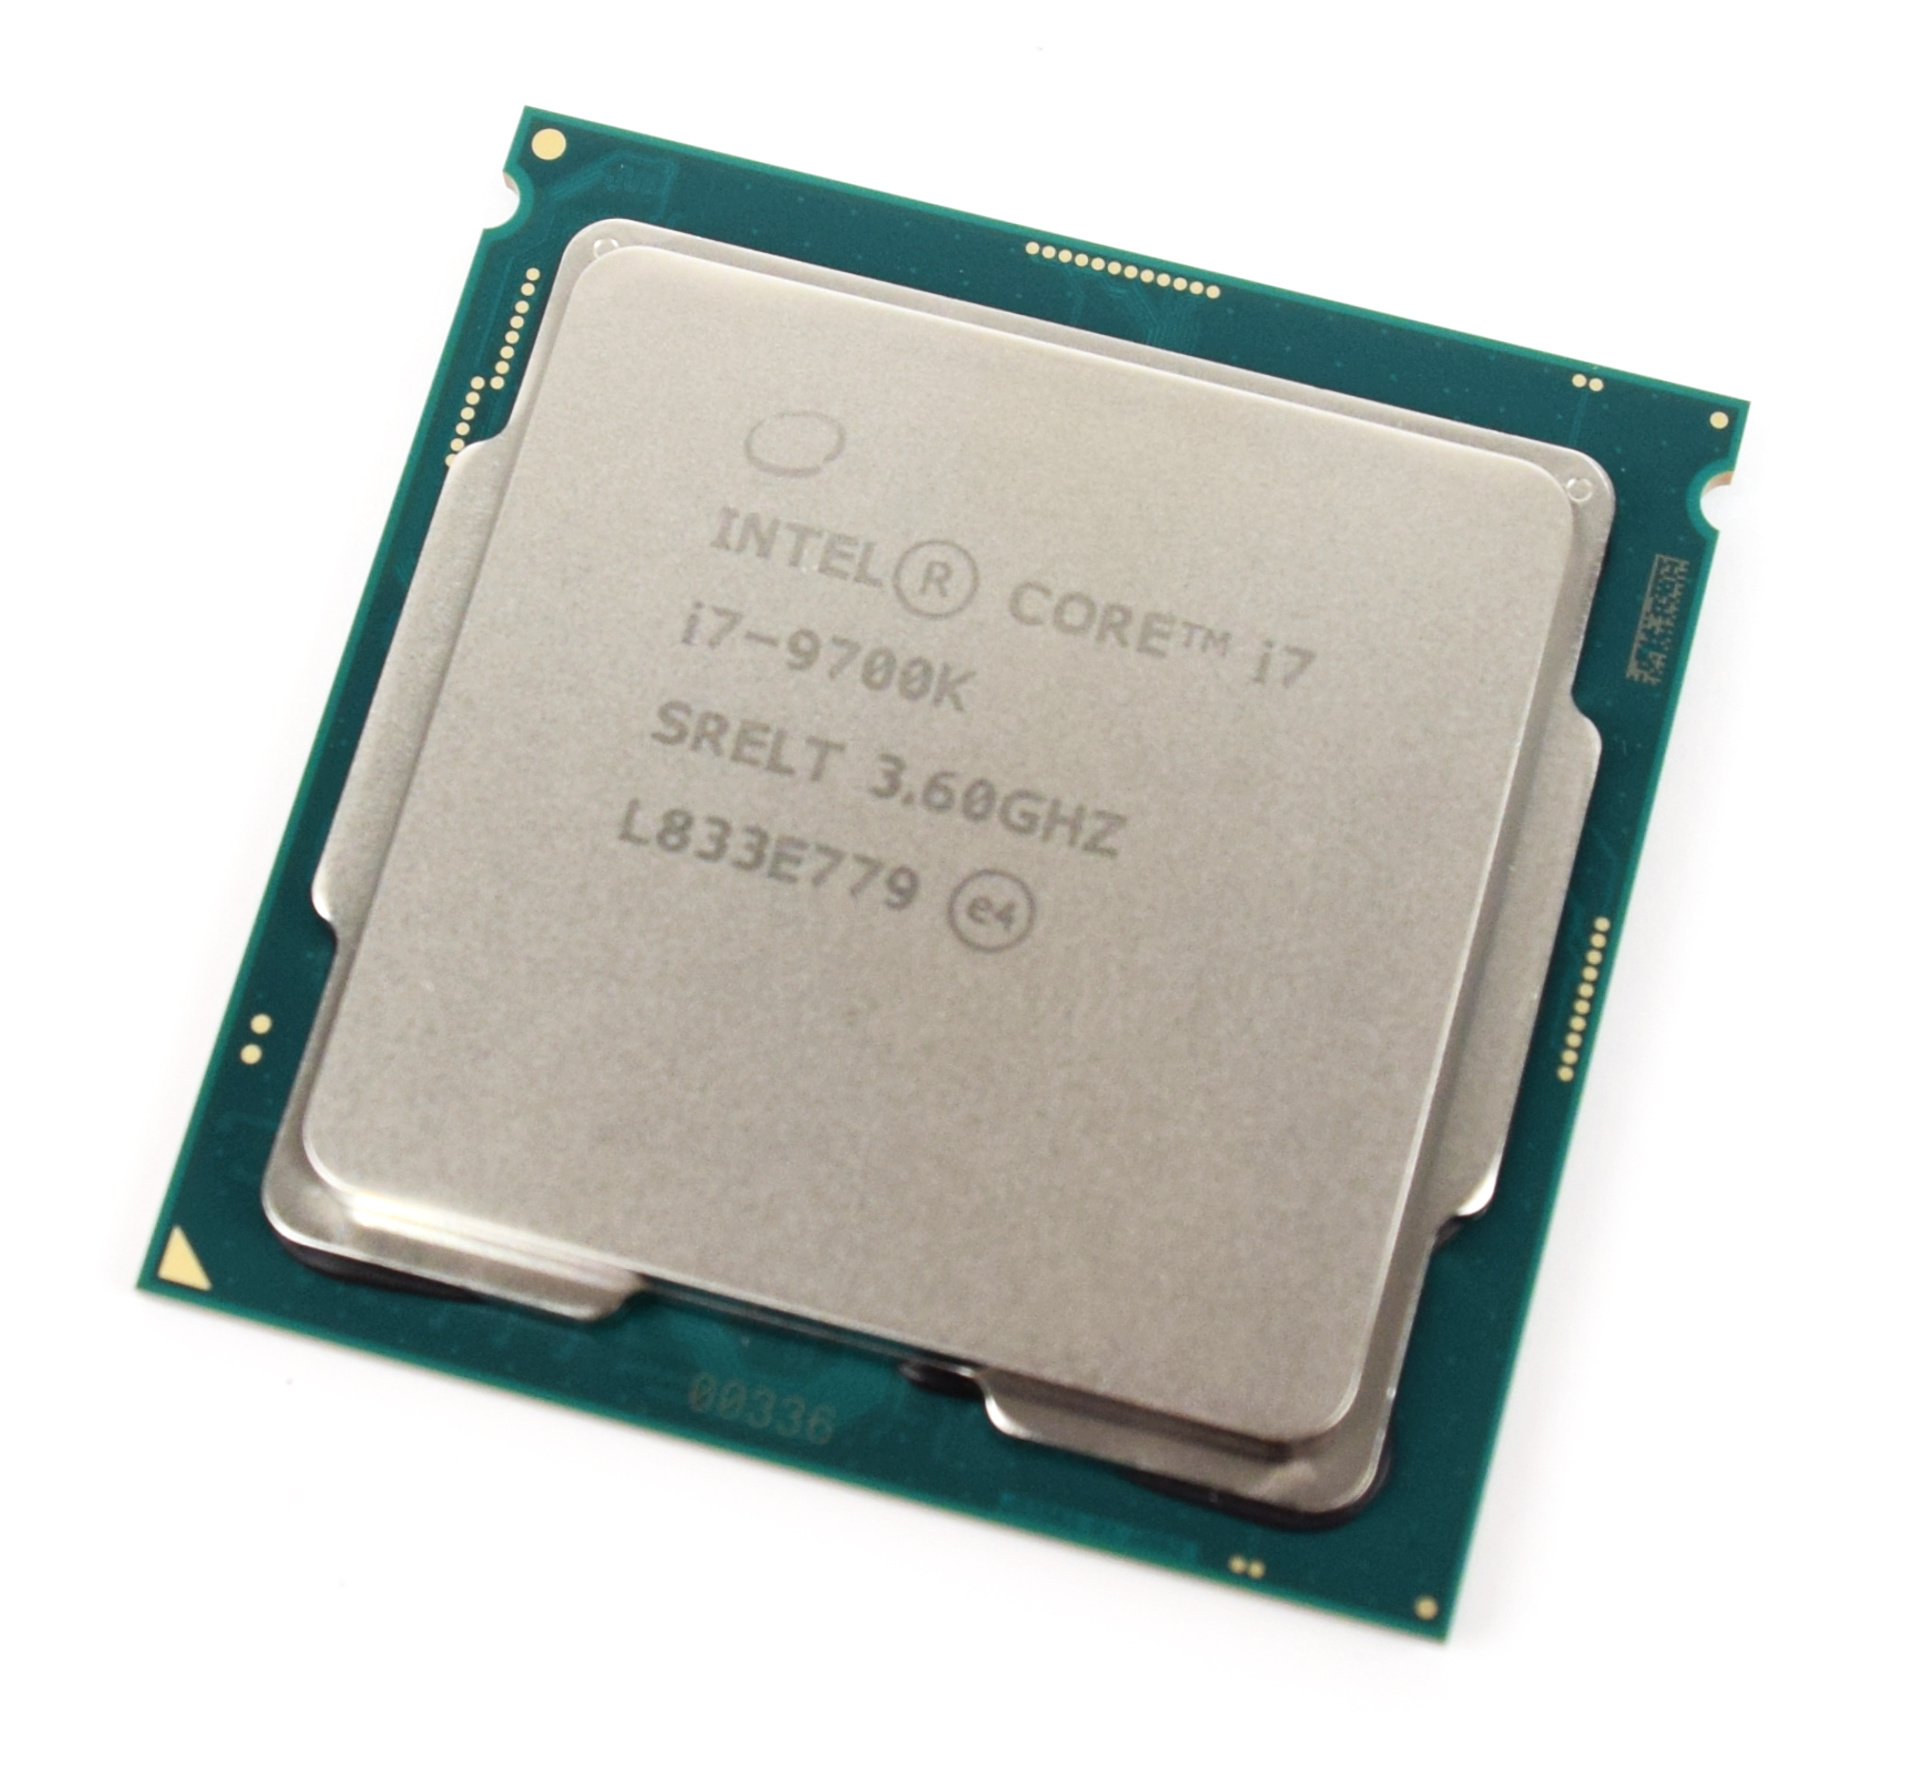 Intel Core i7-9700K Desktop CPU Review - NotebookCheck.net Reviews